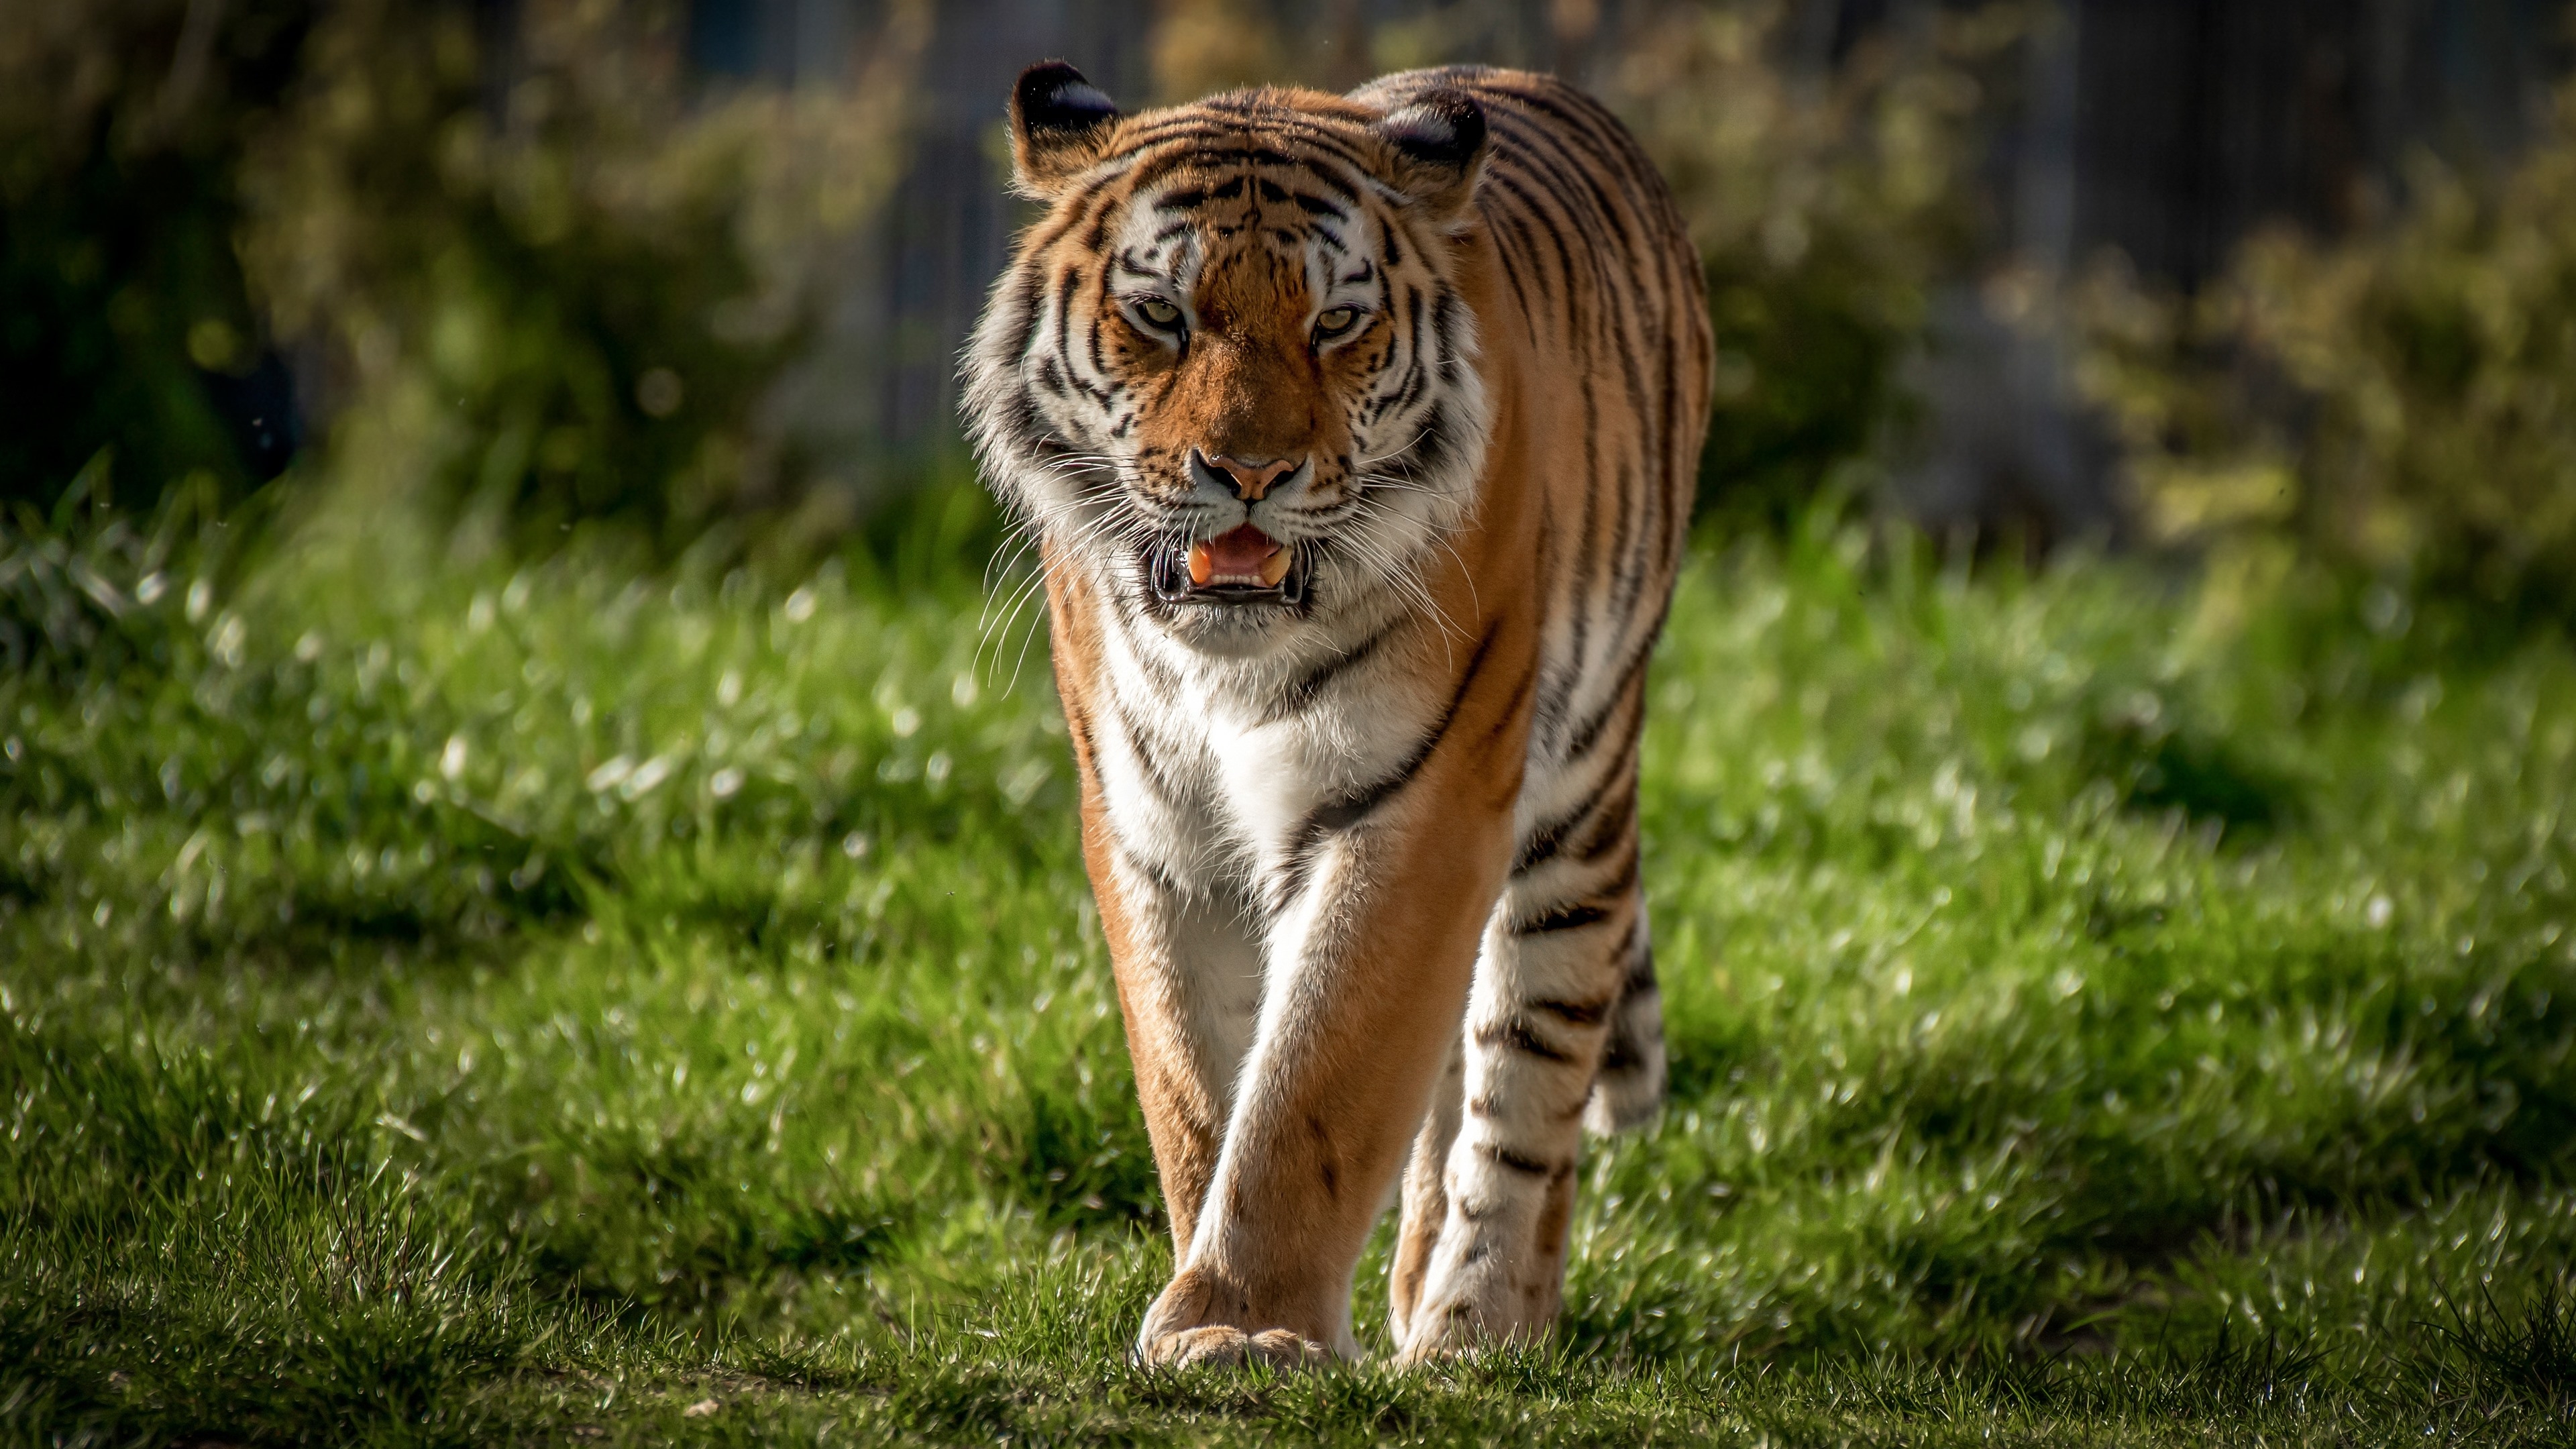 Wallpapers tiger walk wildlife on the desktop